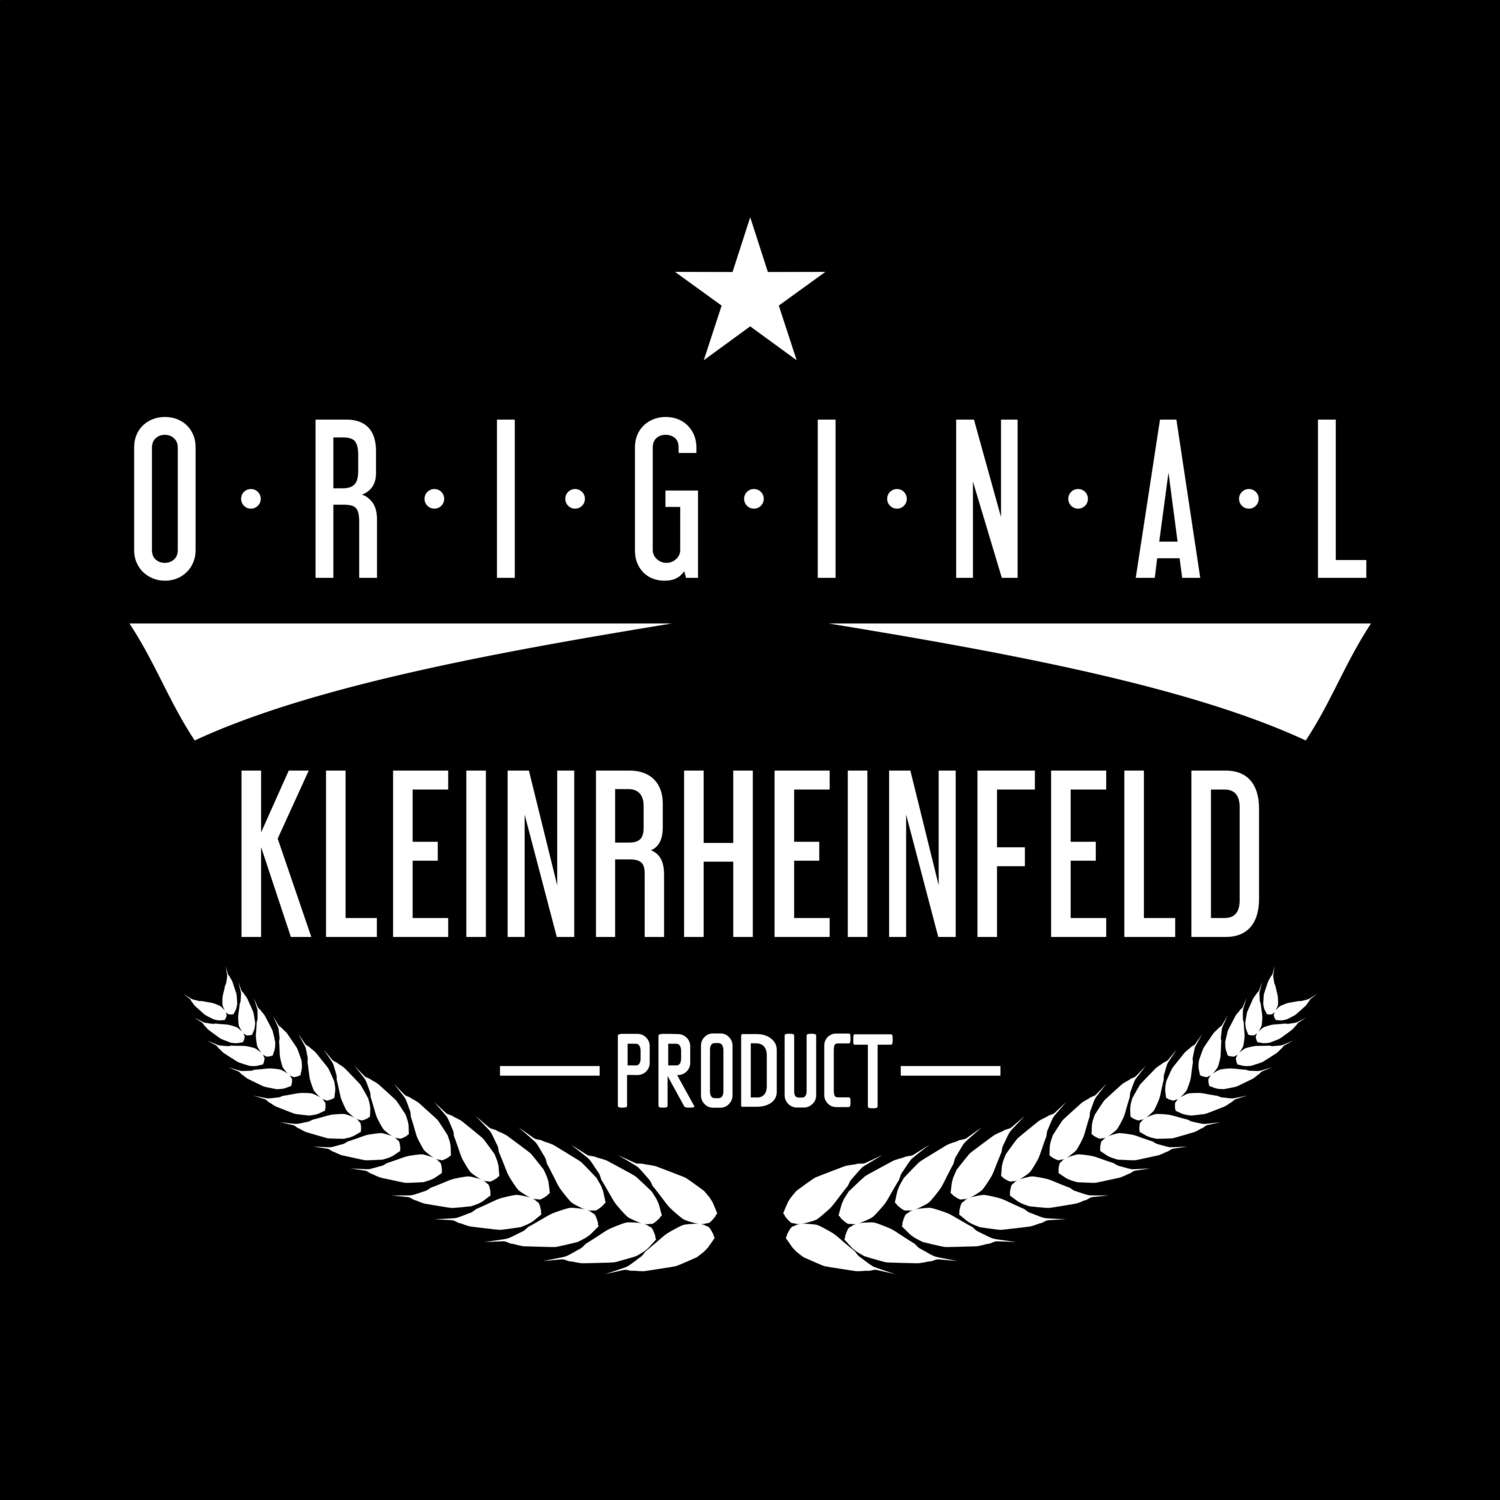 Kleinrheinfeld T-Shirt »Original Product«